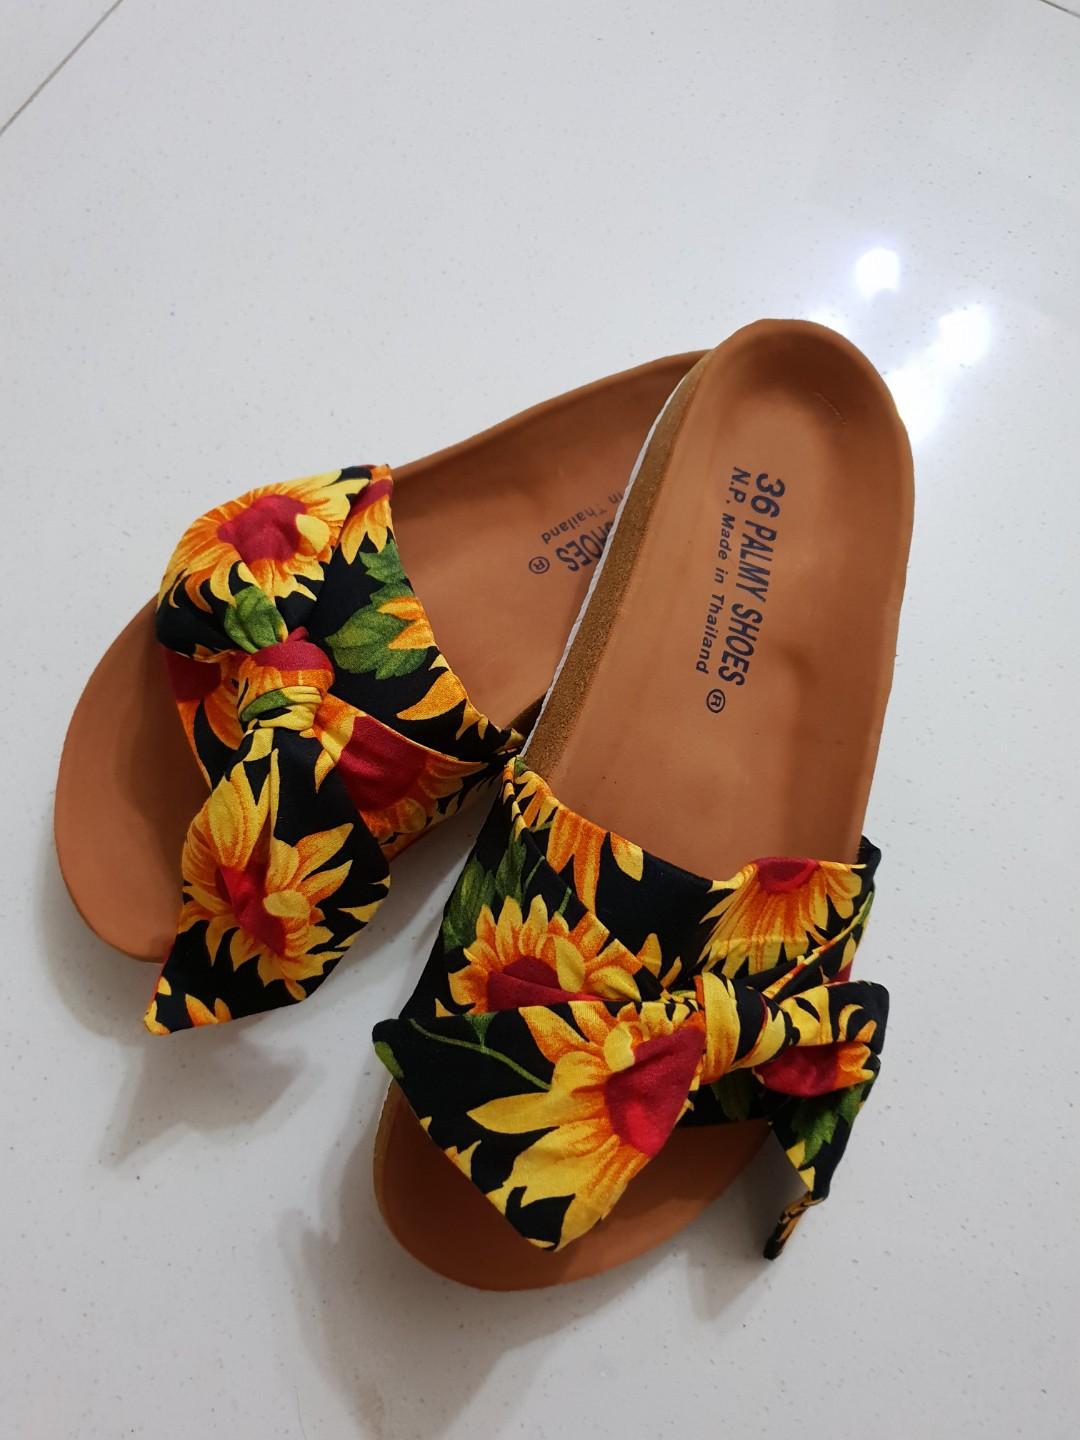 nike sunflower sandals